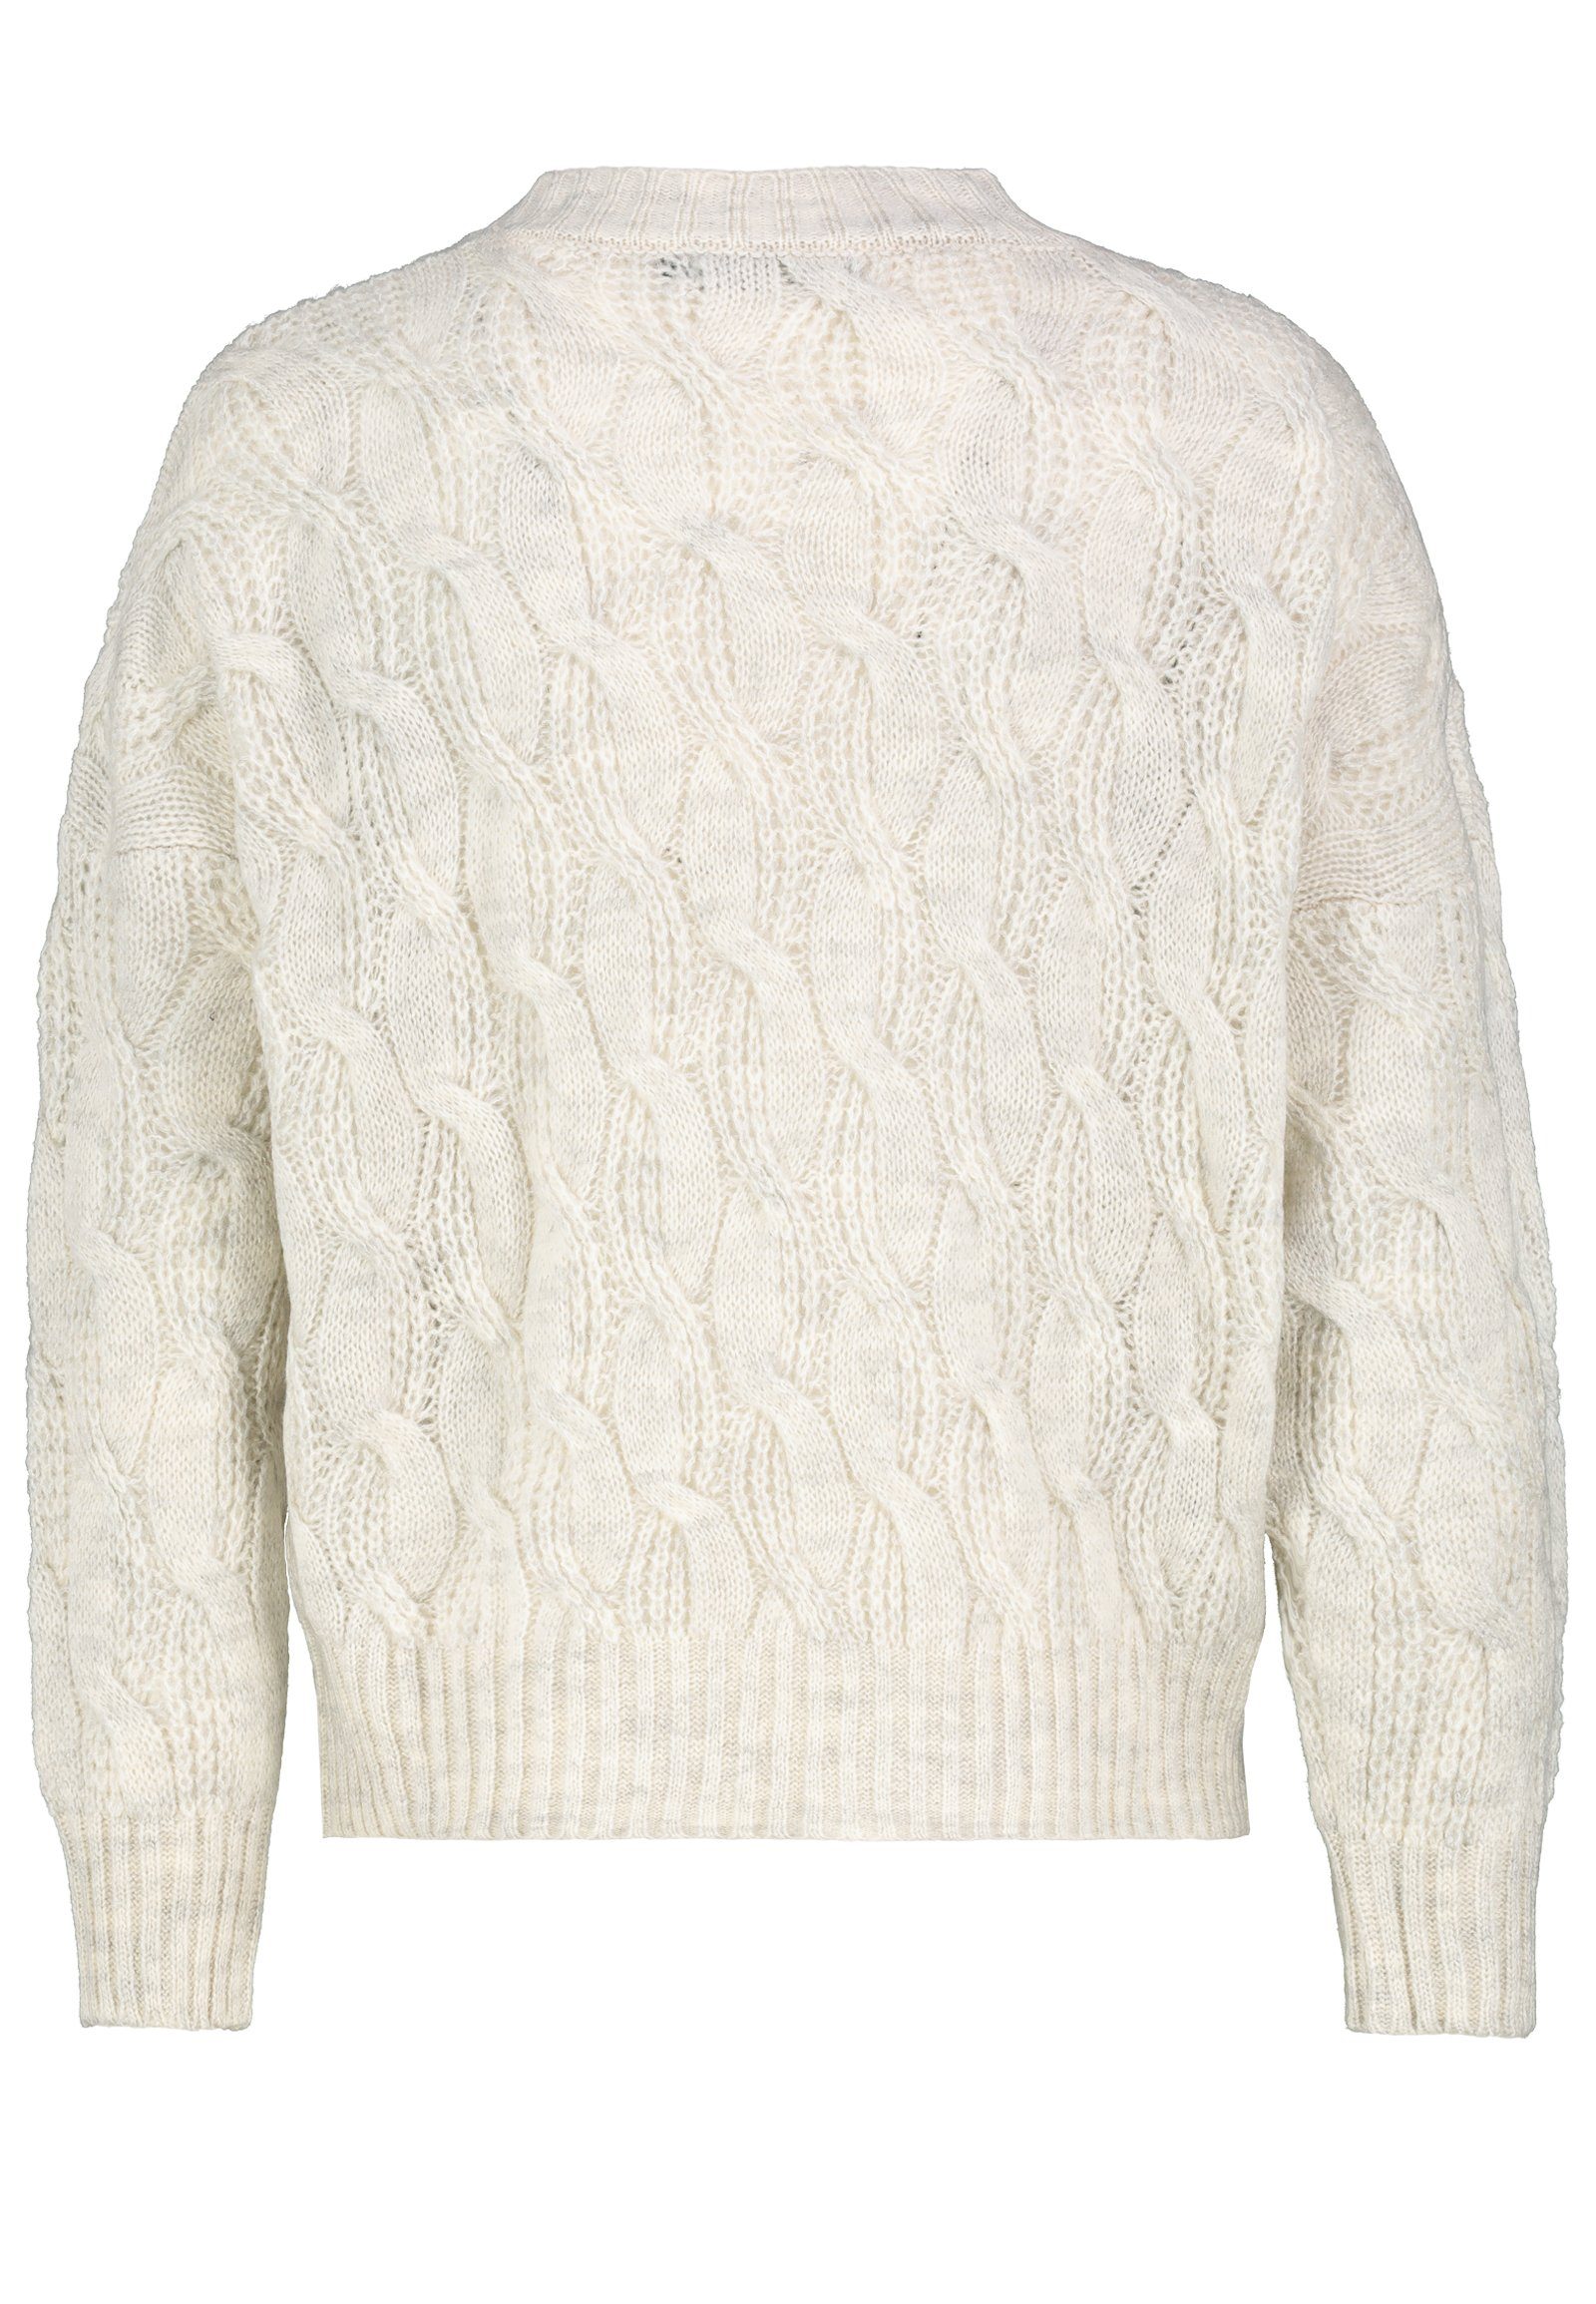 SUBLEVEL Strickpullover Pullover mit white Strickmuster